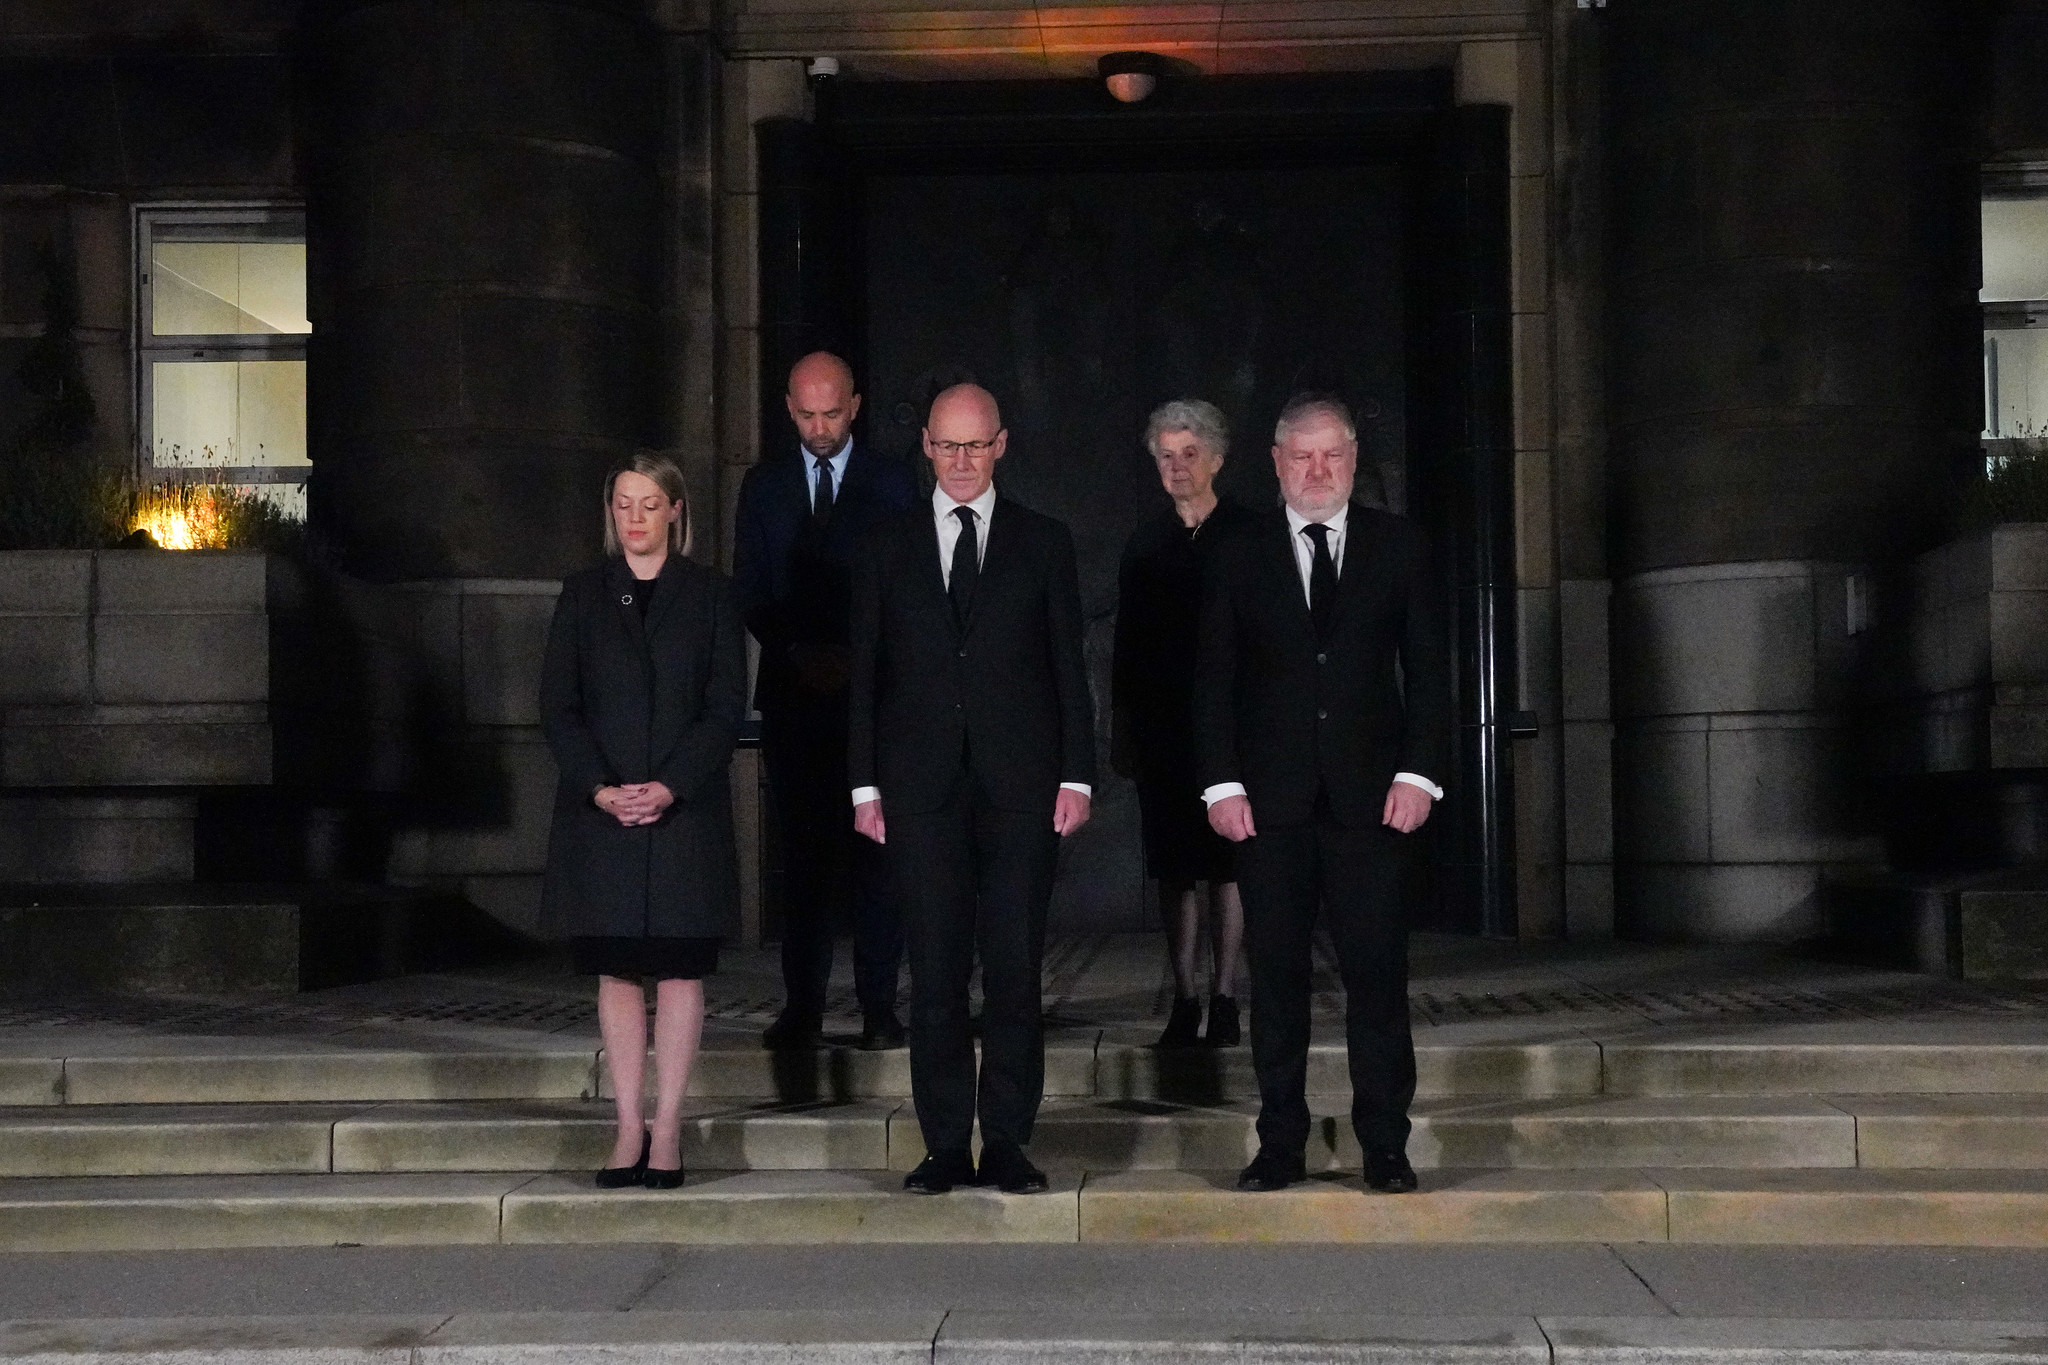 John Swinney and Scottish ministers mark the minute's silence.